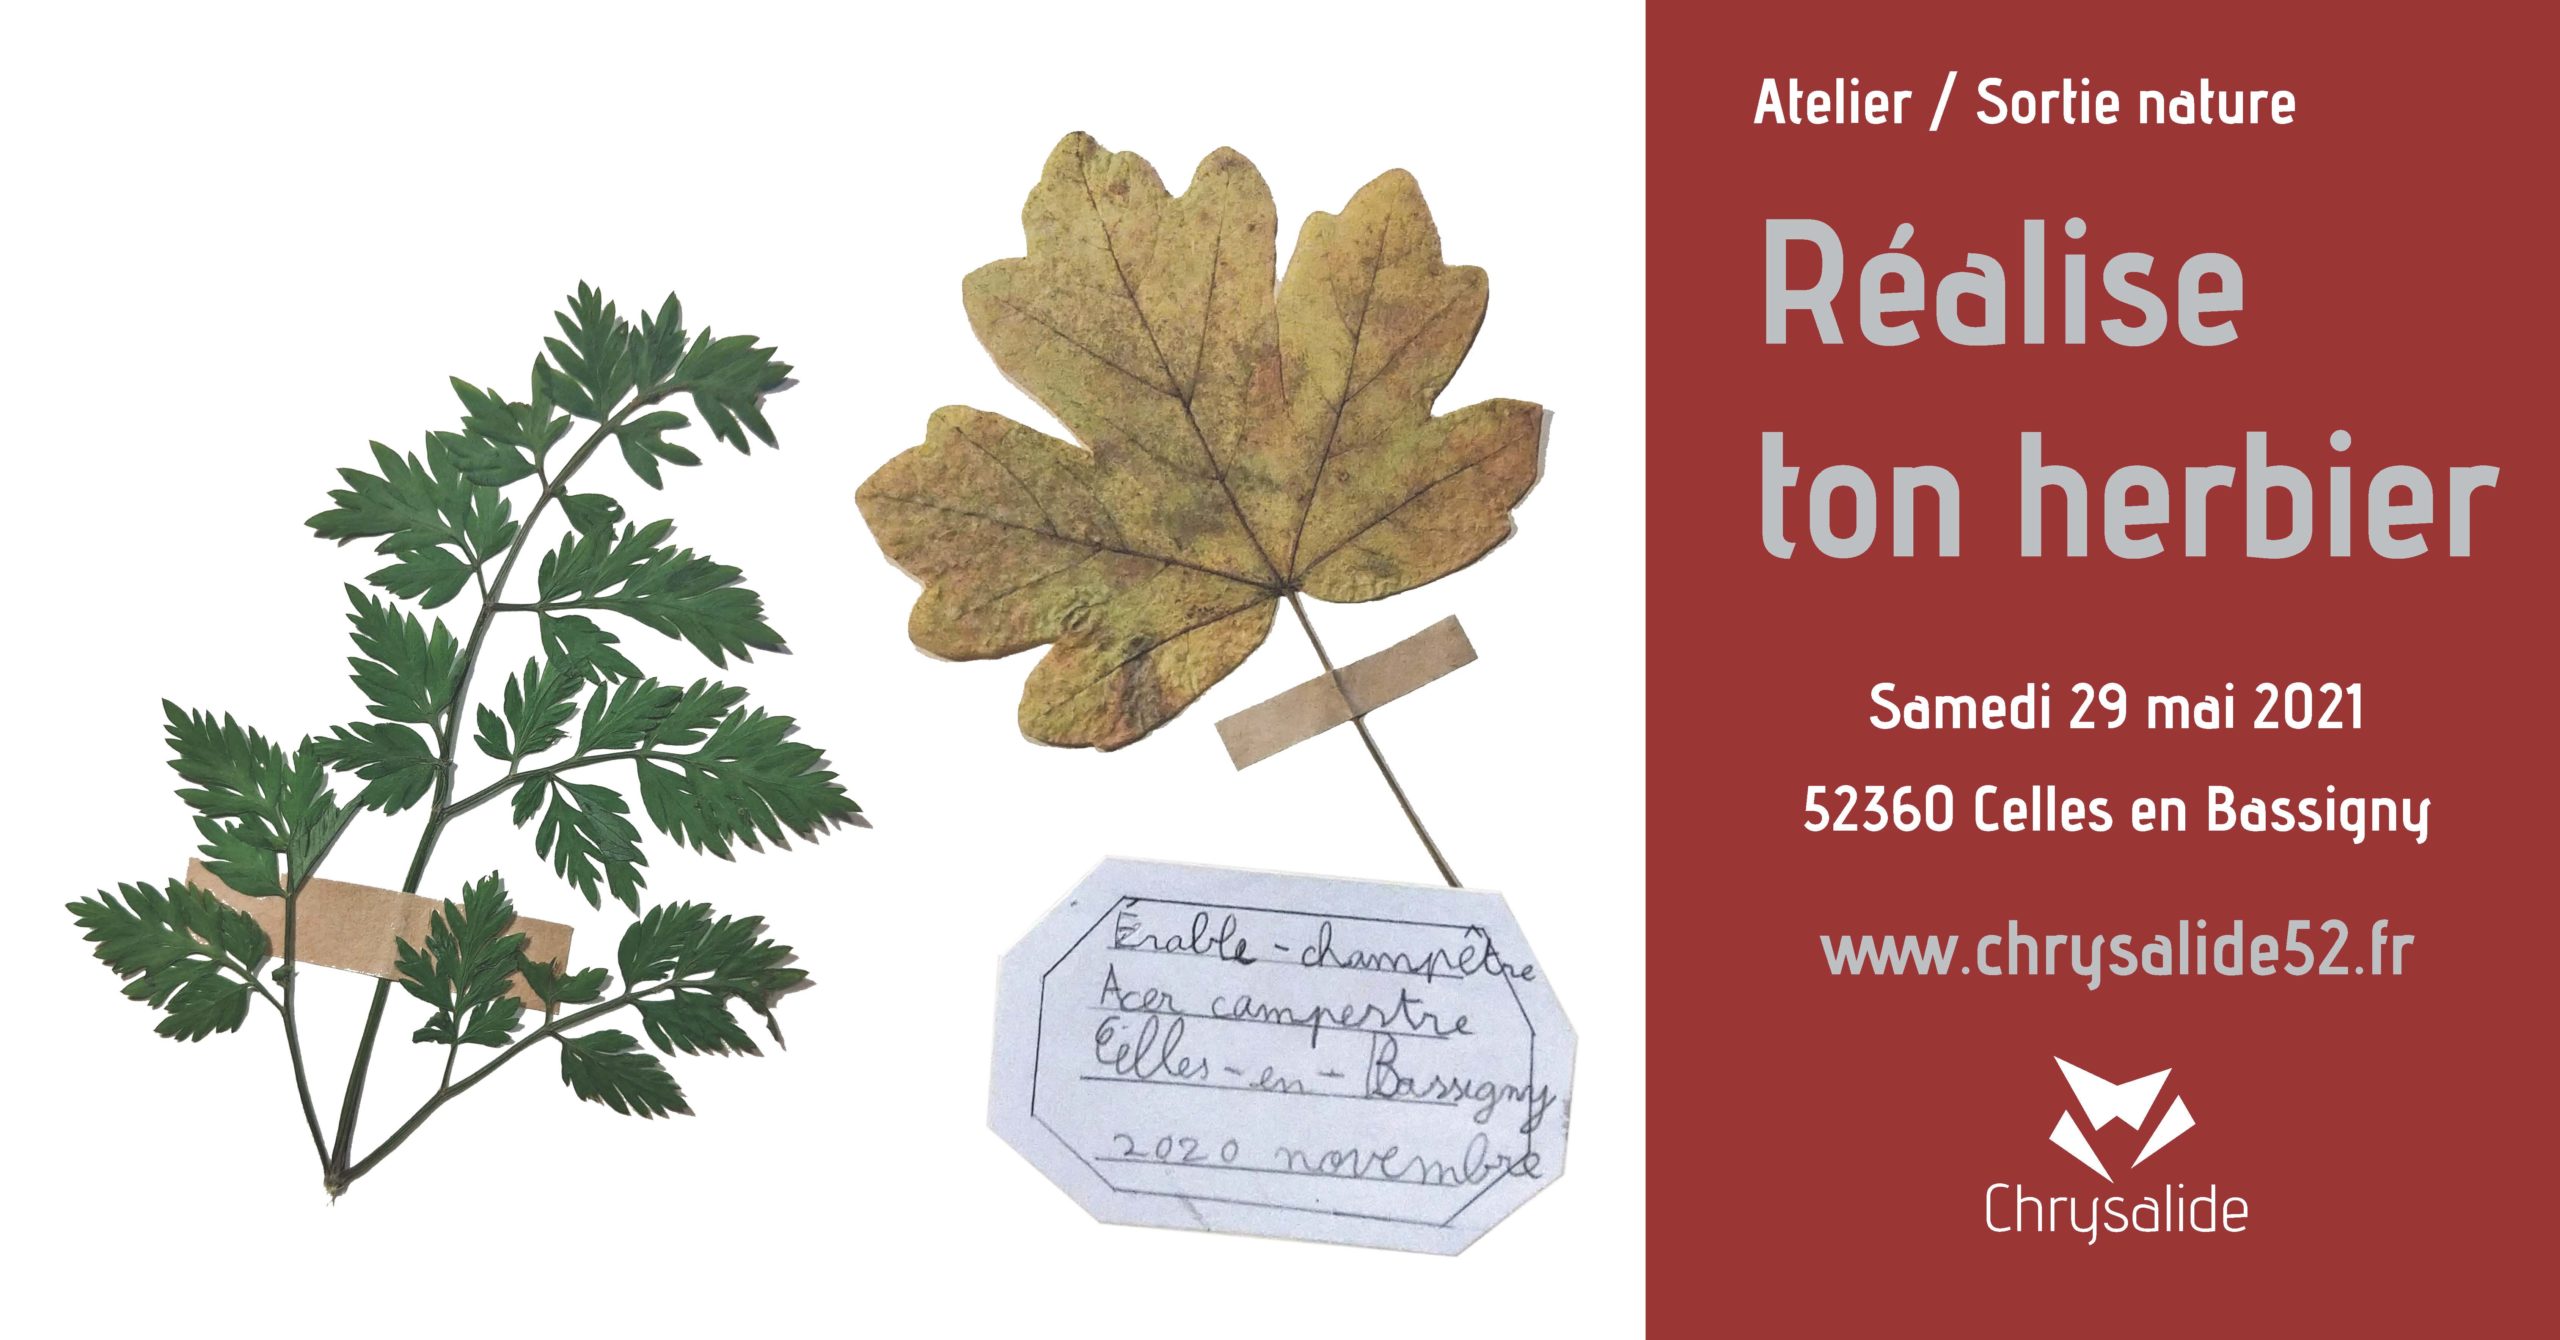 Atelier - Sortie nature - Réalise ton herbier - Chrysalide52 - Michael Geber - Haute-Marne